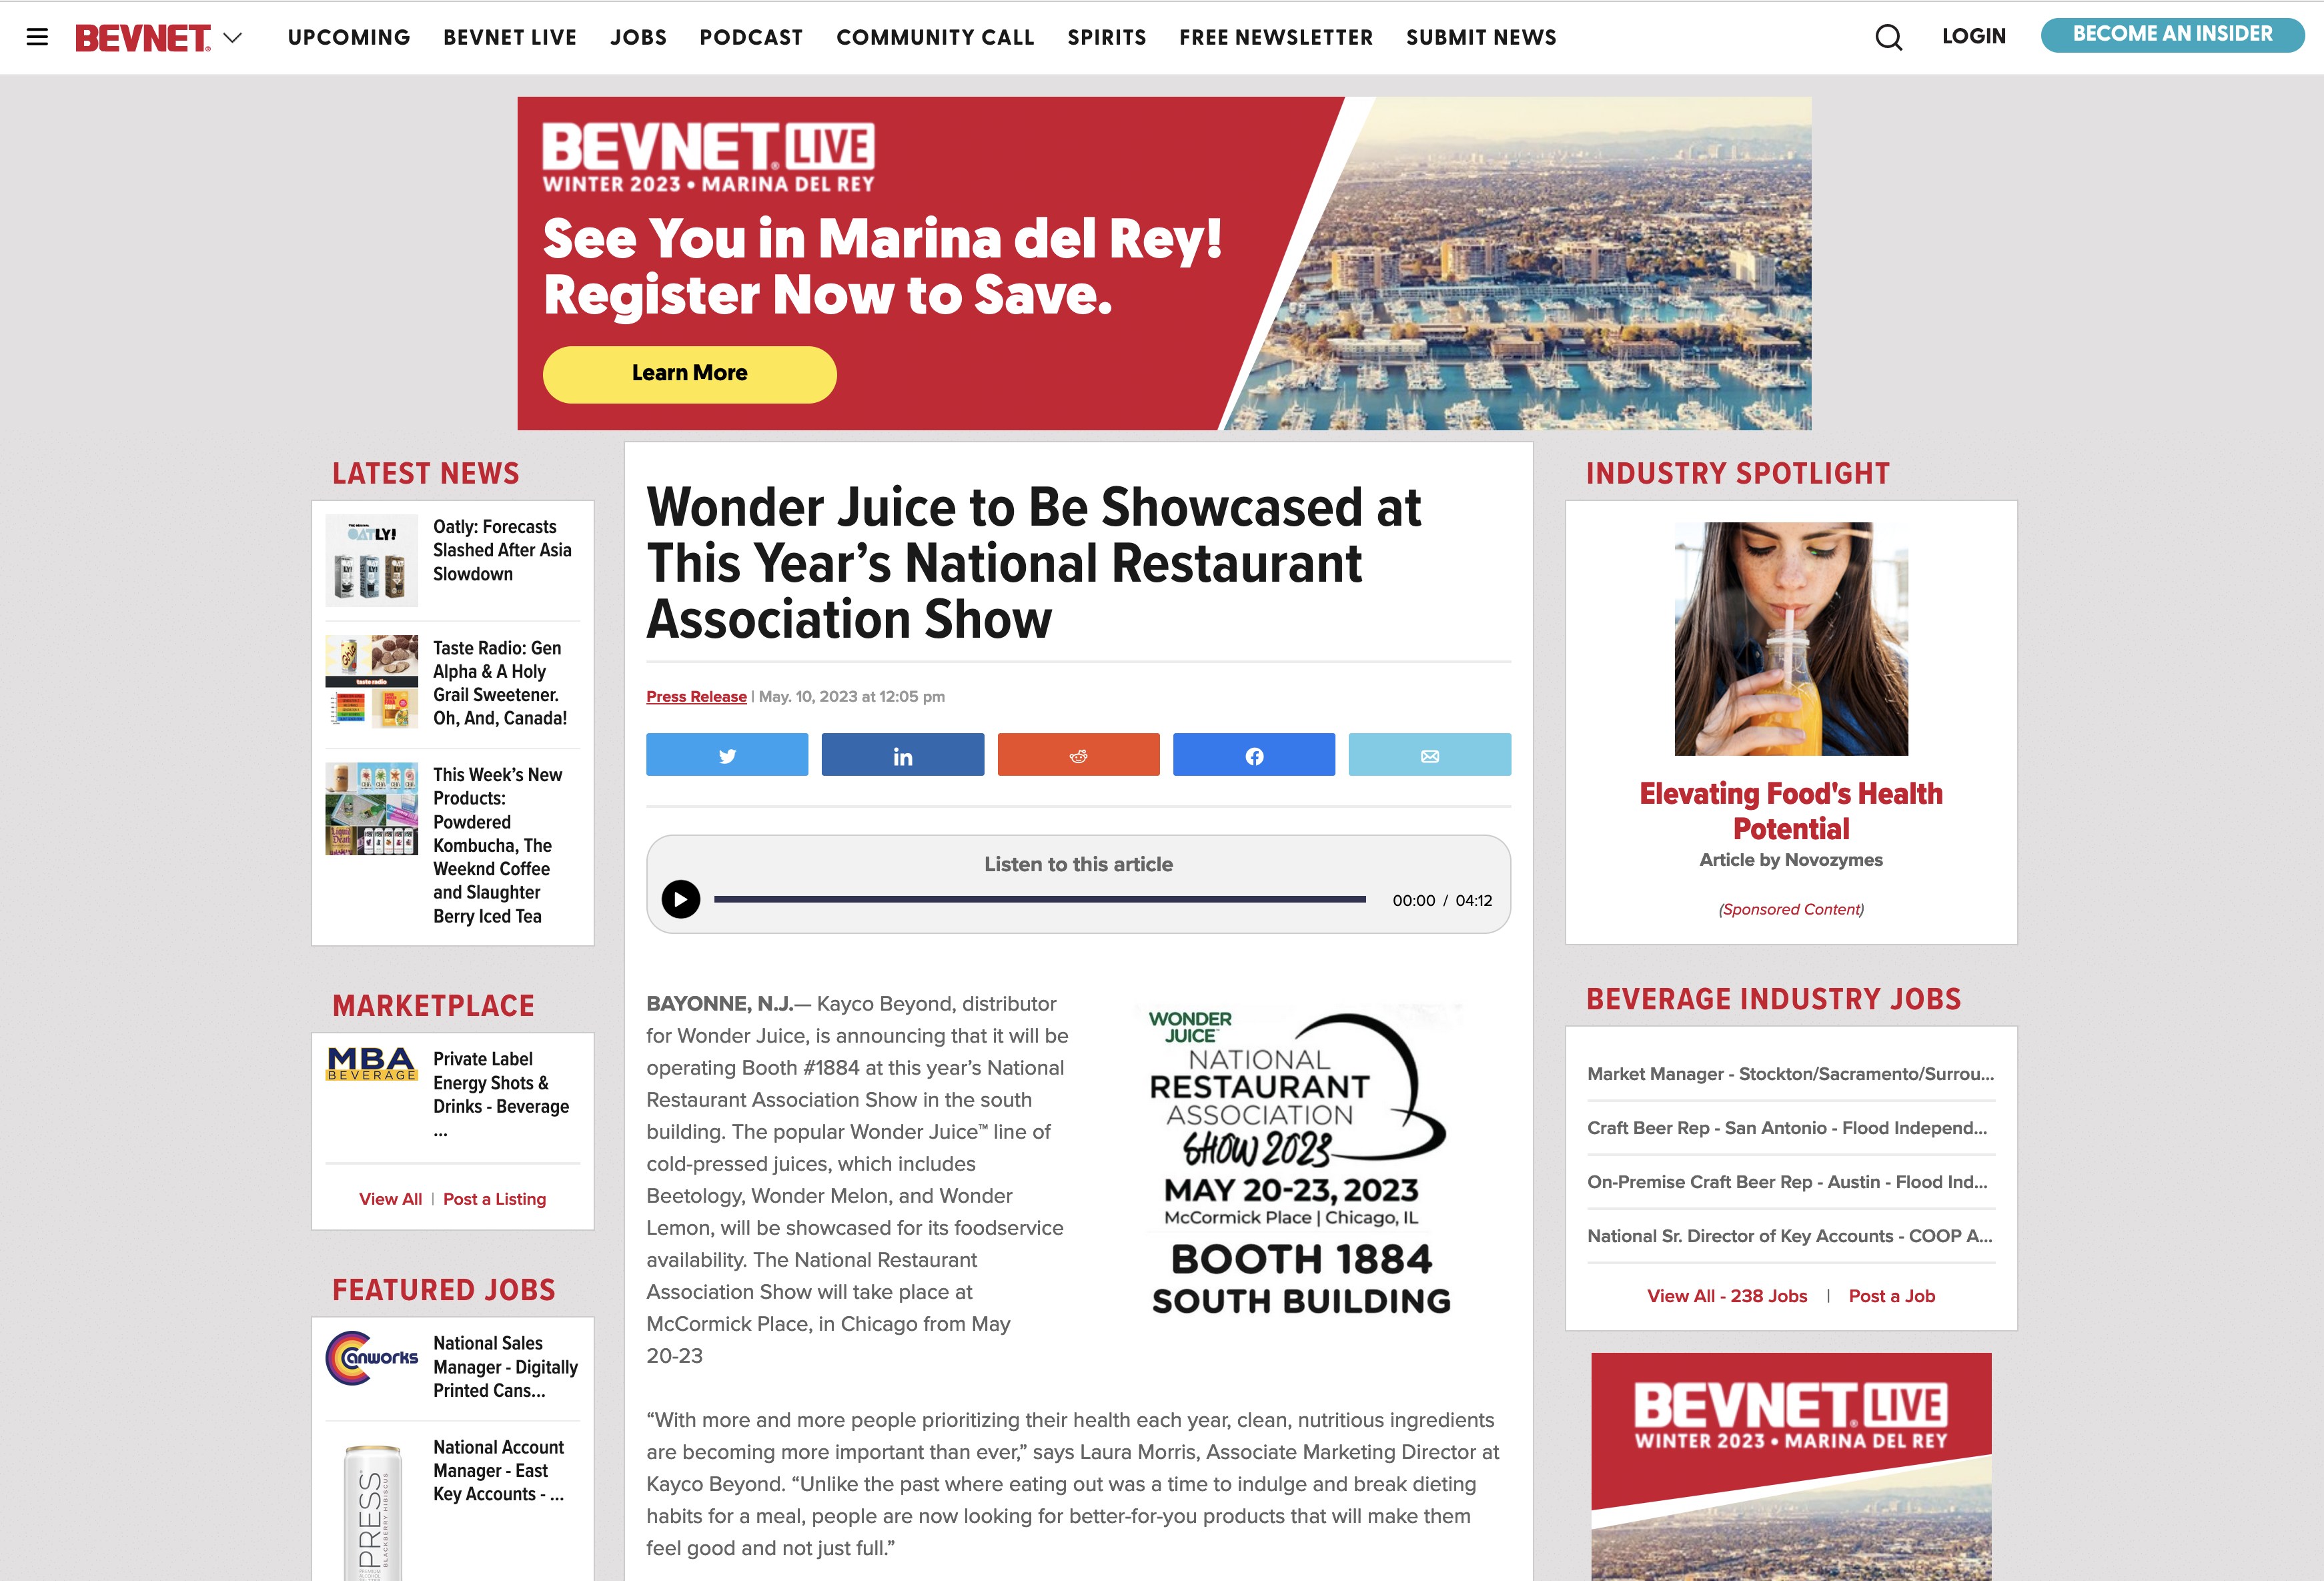 BevNet article on Wonder Juice image